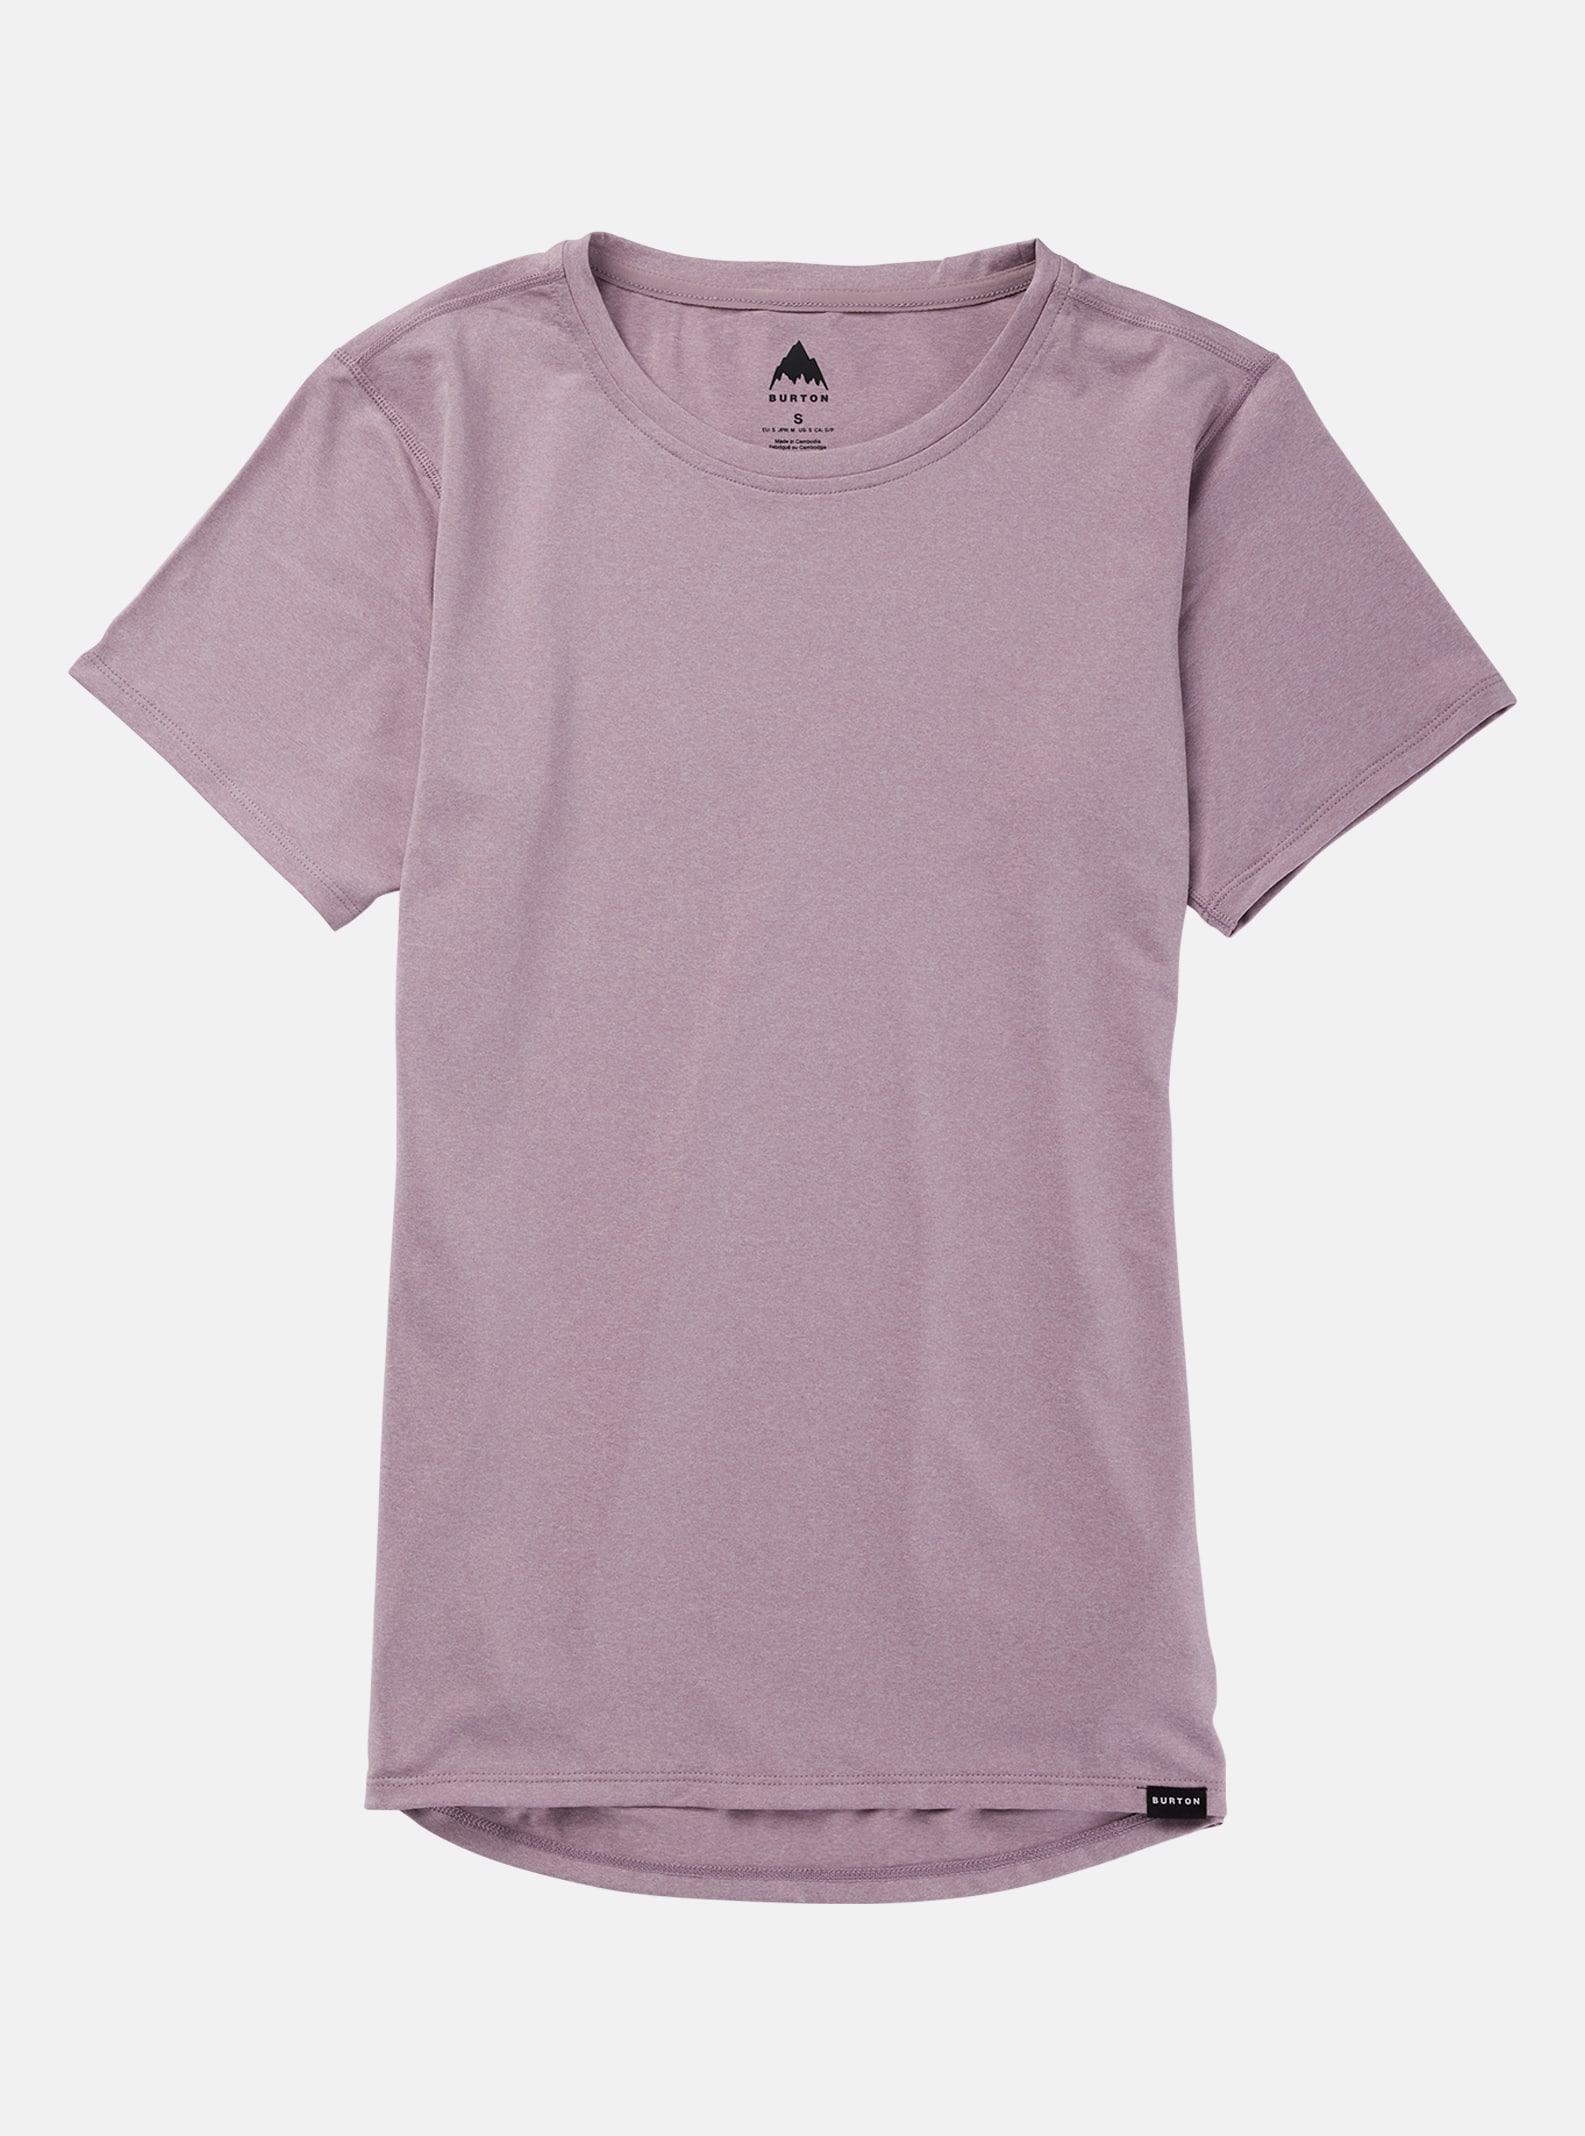 Burton Multipath Essential Tech kortärmad t-shirt för damer, Elderberry Heather, XL